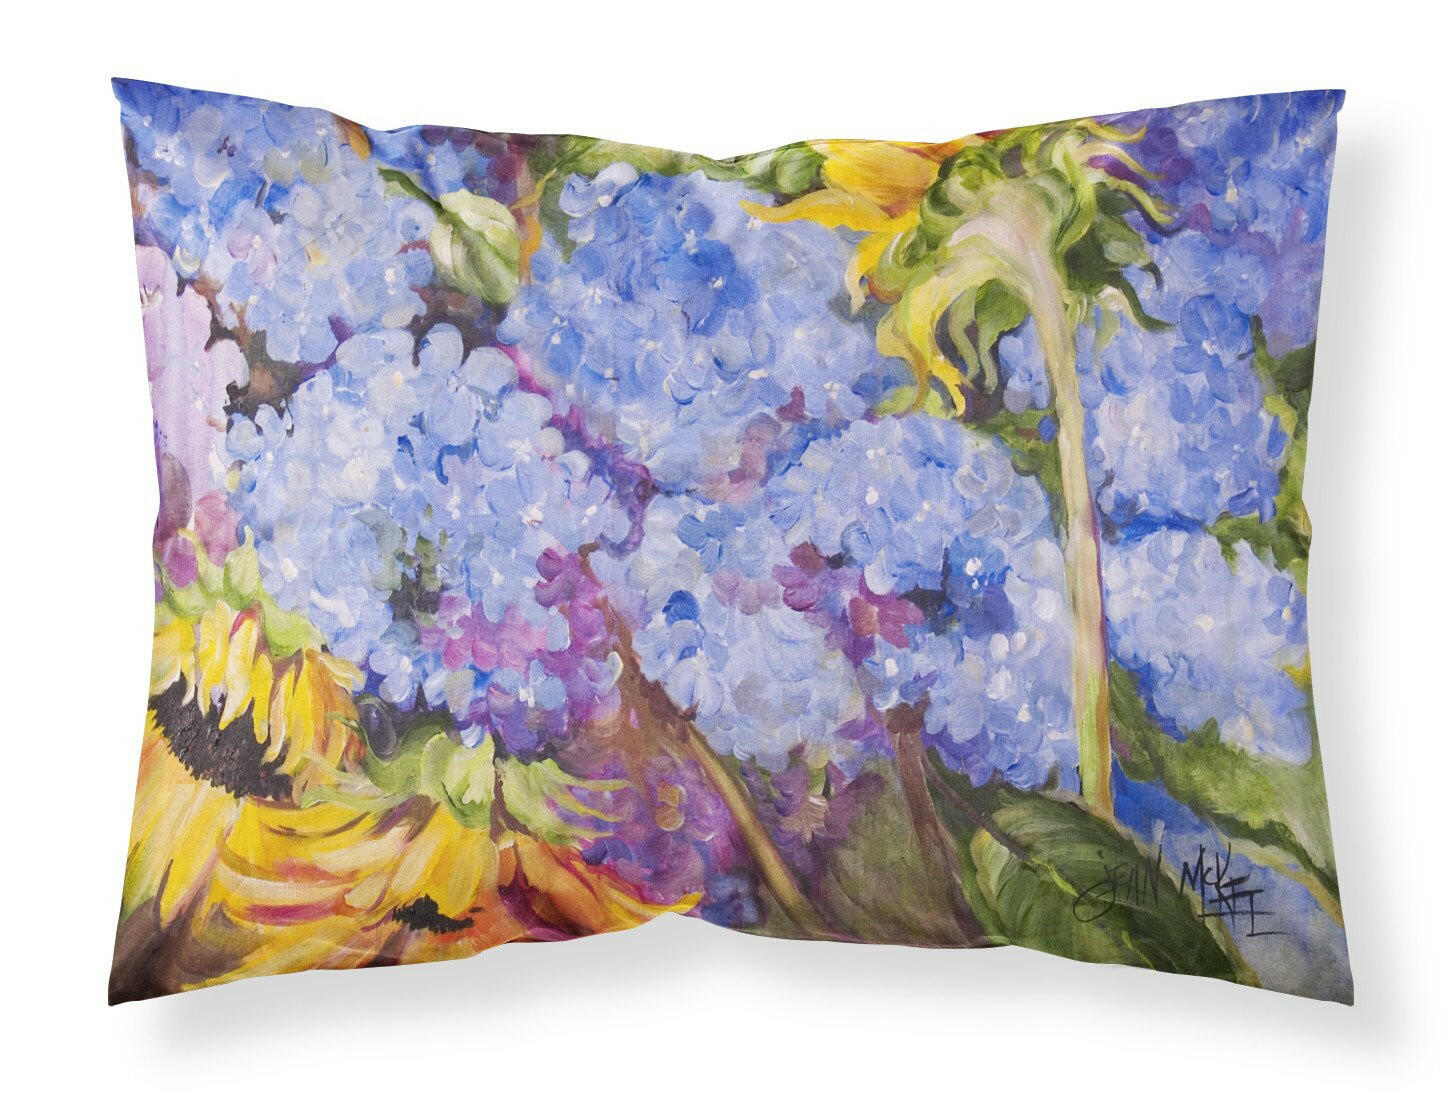 Hydrangeas and Sunflowers Fabric Standard Pillowcase JMK1119PILLOWCASE by Caroline's Treasures